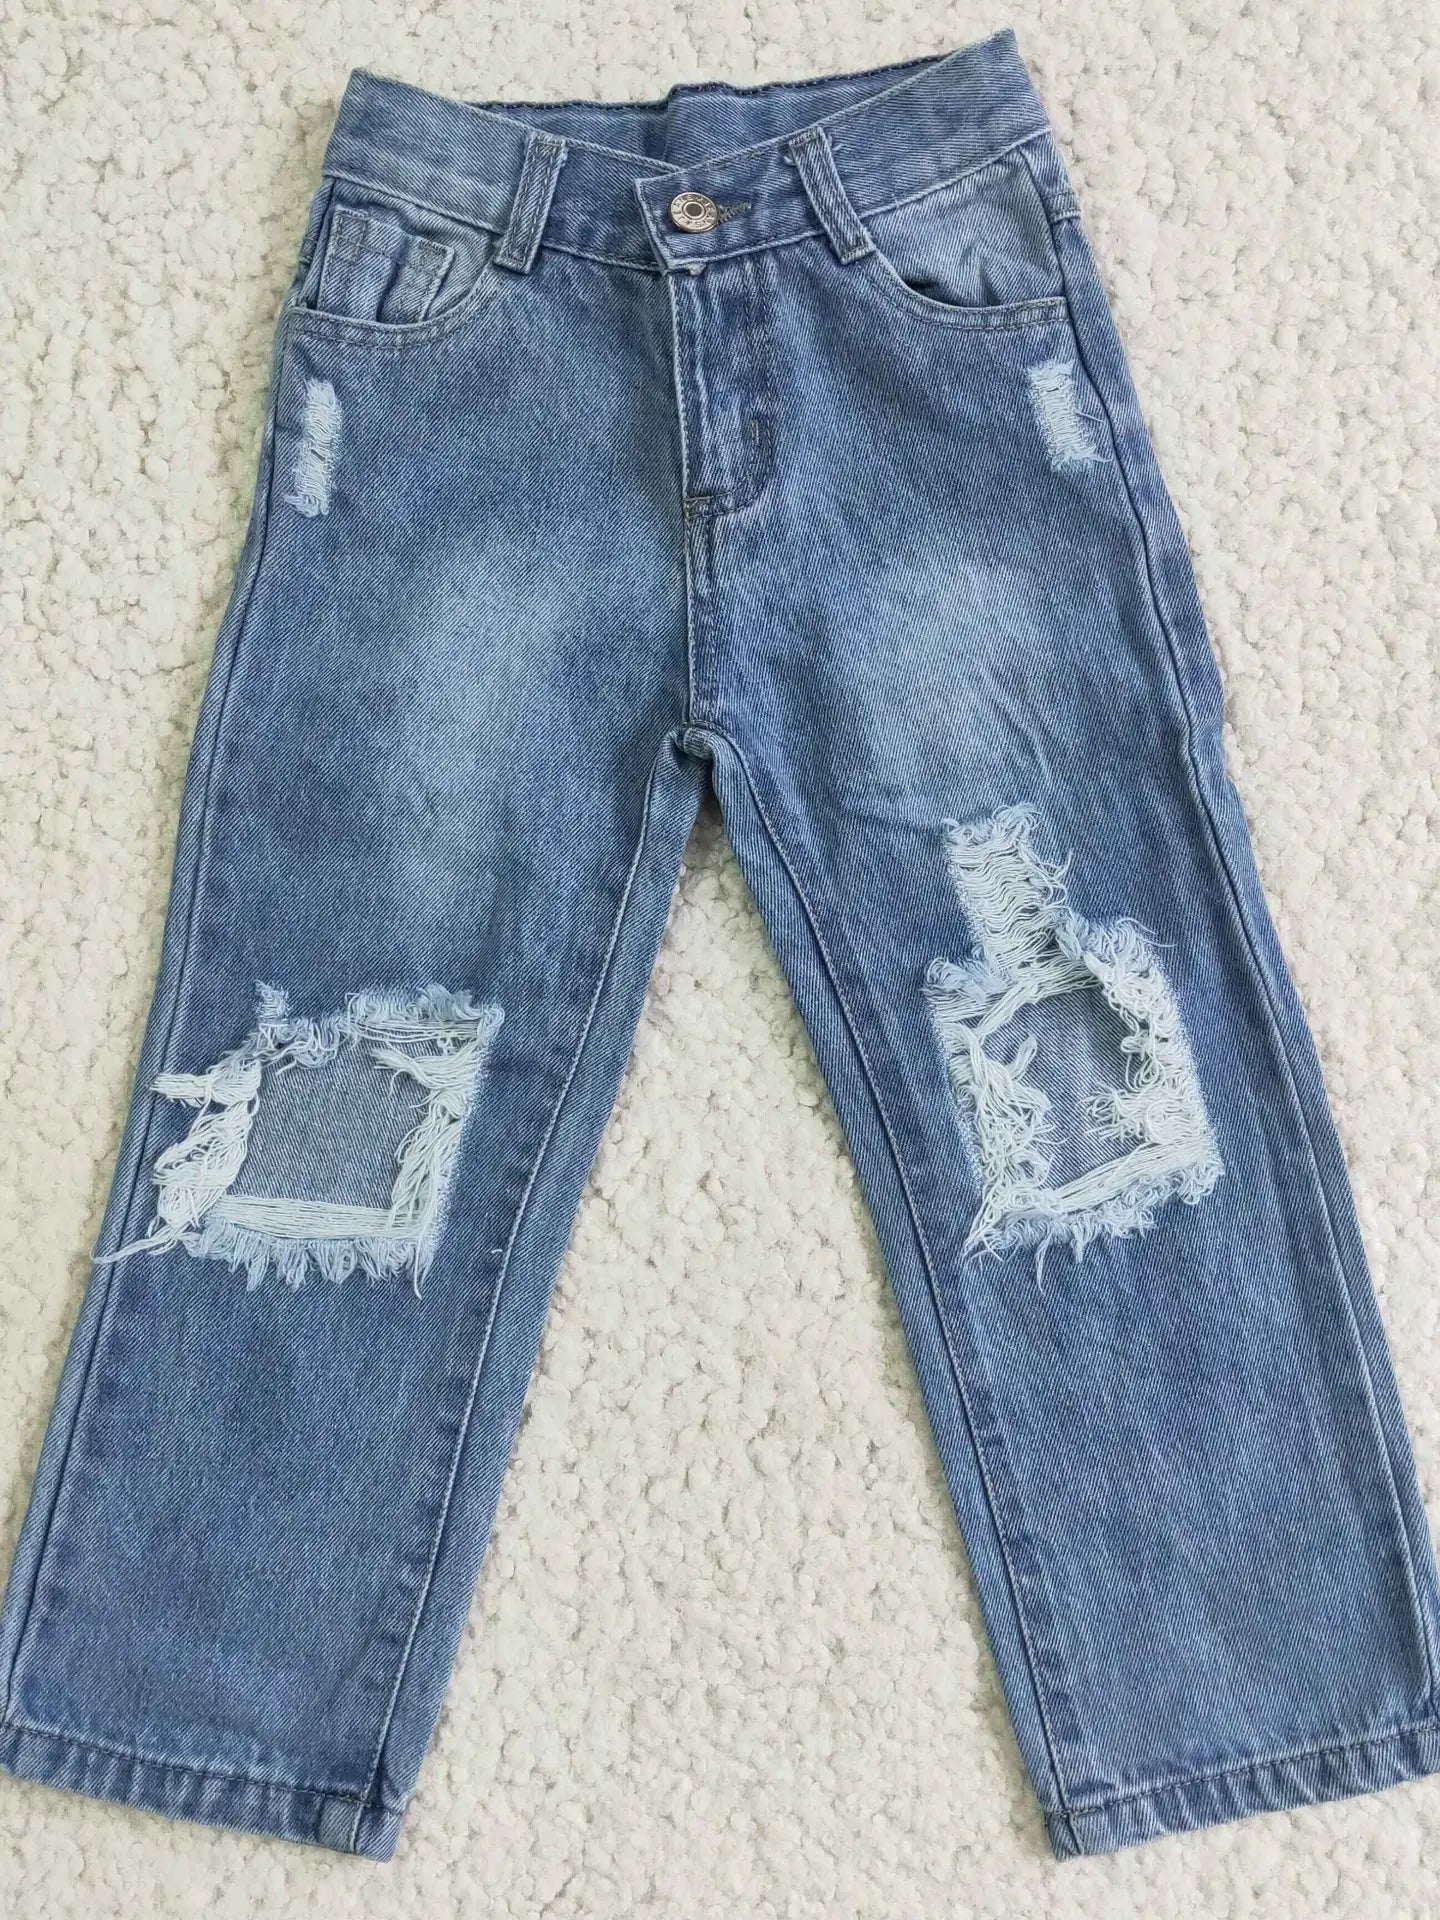 Kids and Tween Summer Hippie Distressed Jeans